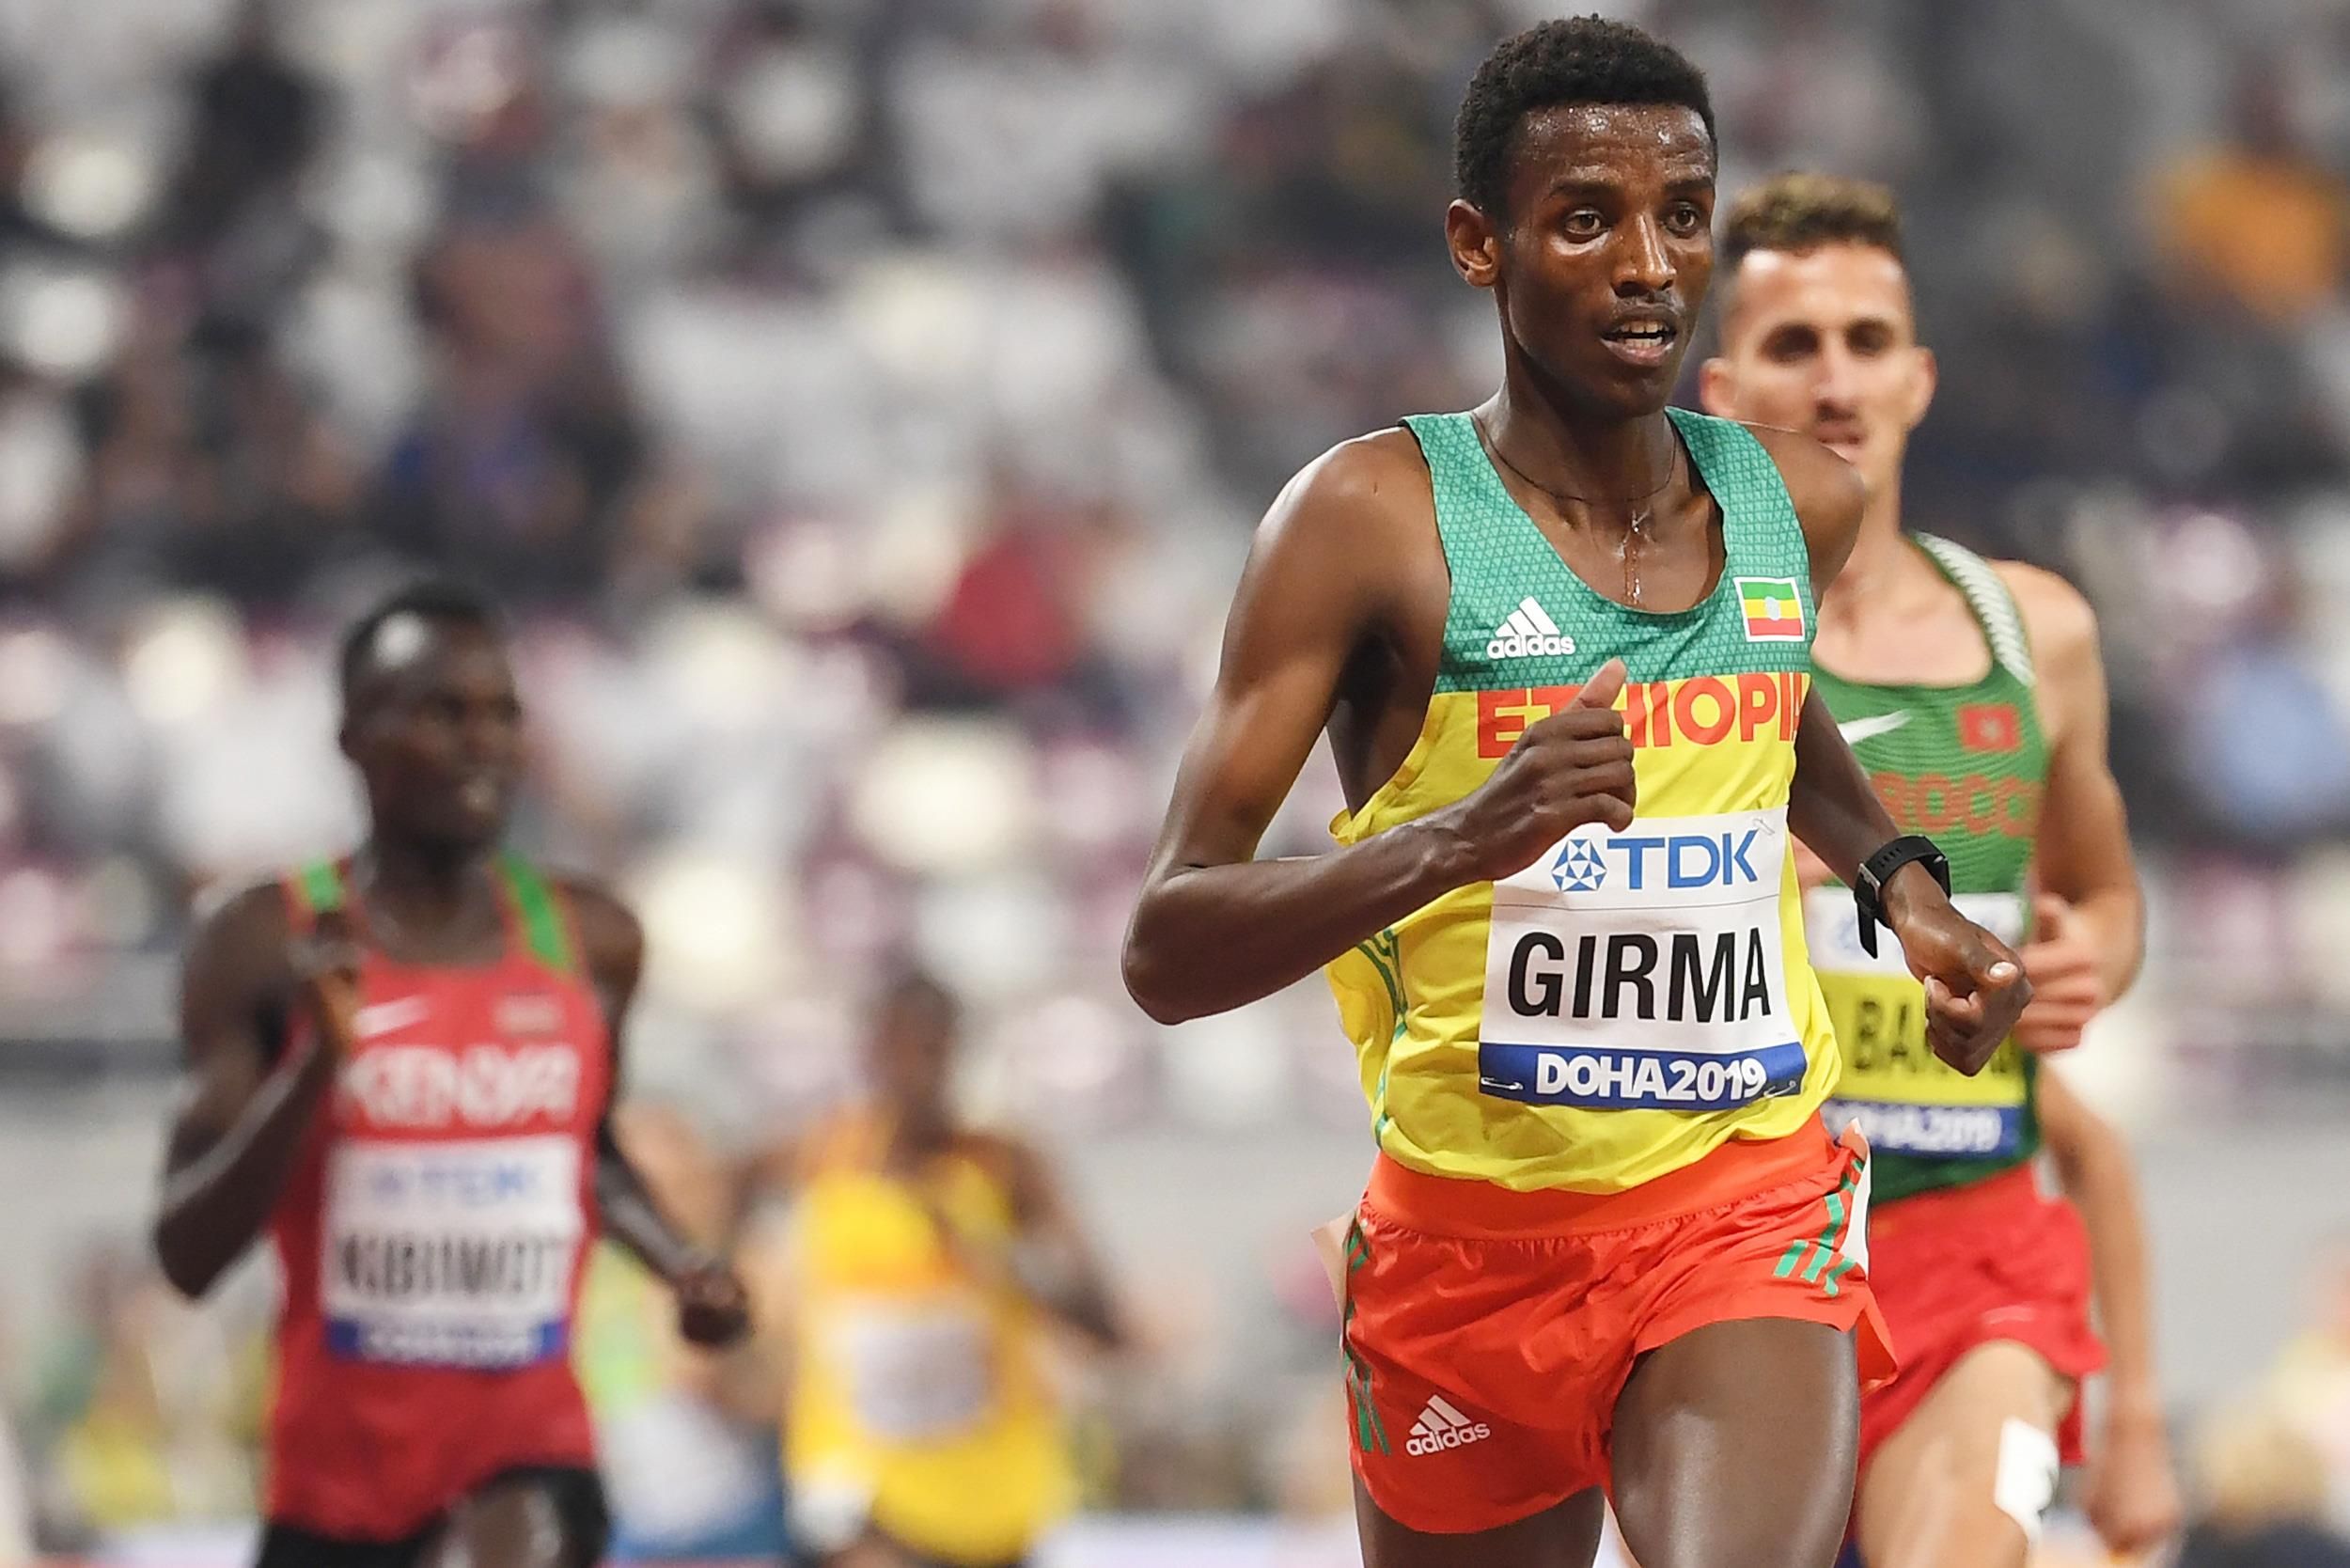 Lamecha Girma in the steeplechase at the IAAF World Athletics Championships Doha 2019